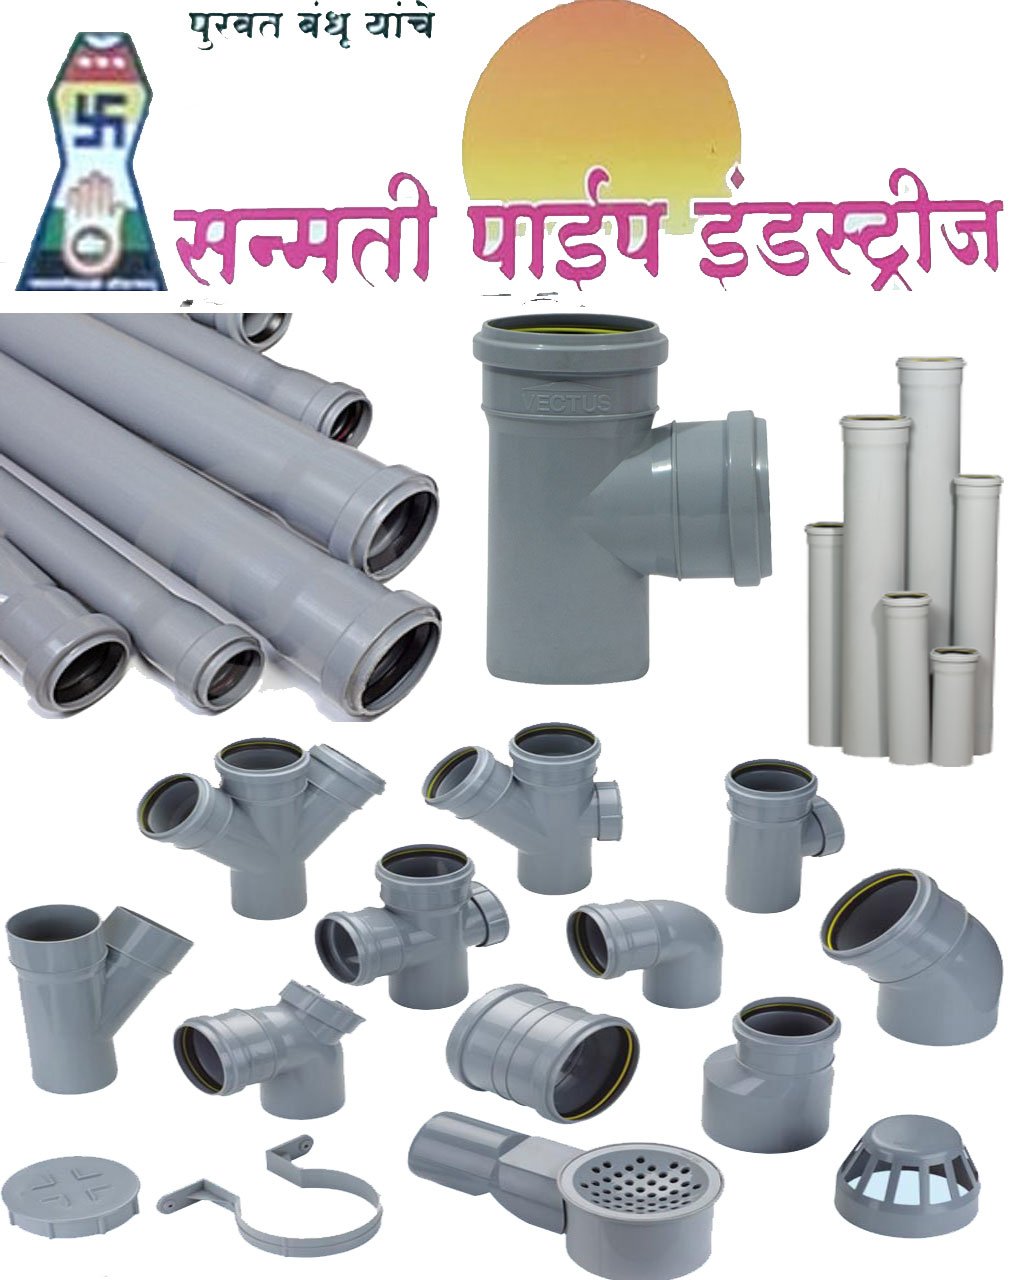 Sanmati Pipe Industries | SolapurMall.com